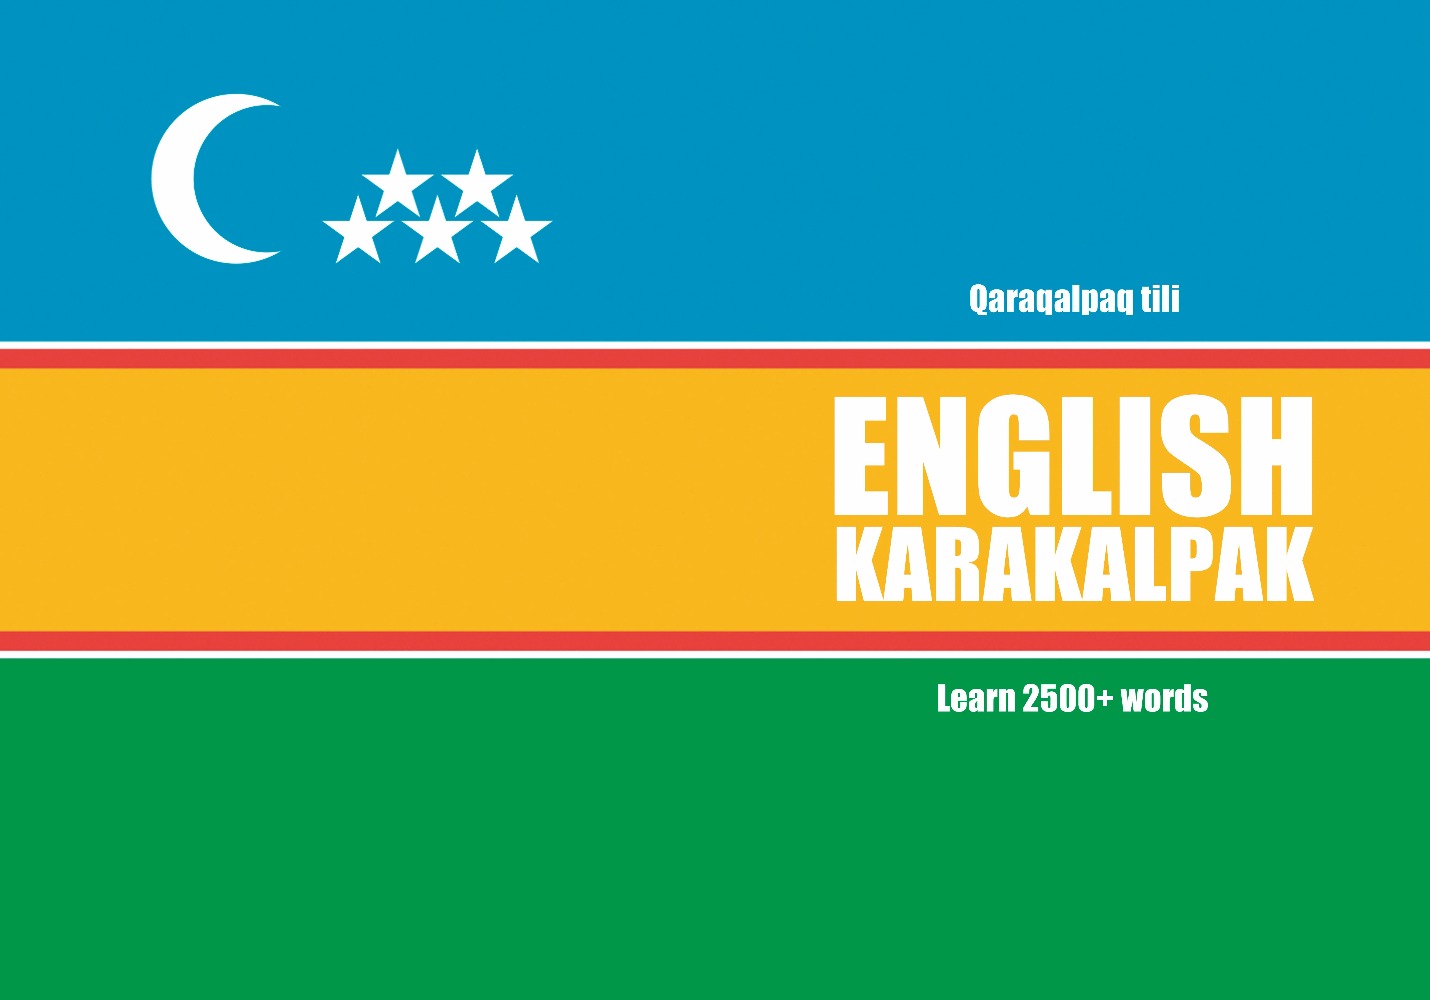 Karakalpak language learning notebook cover